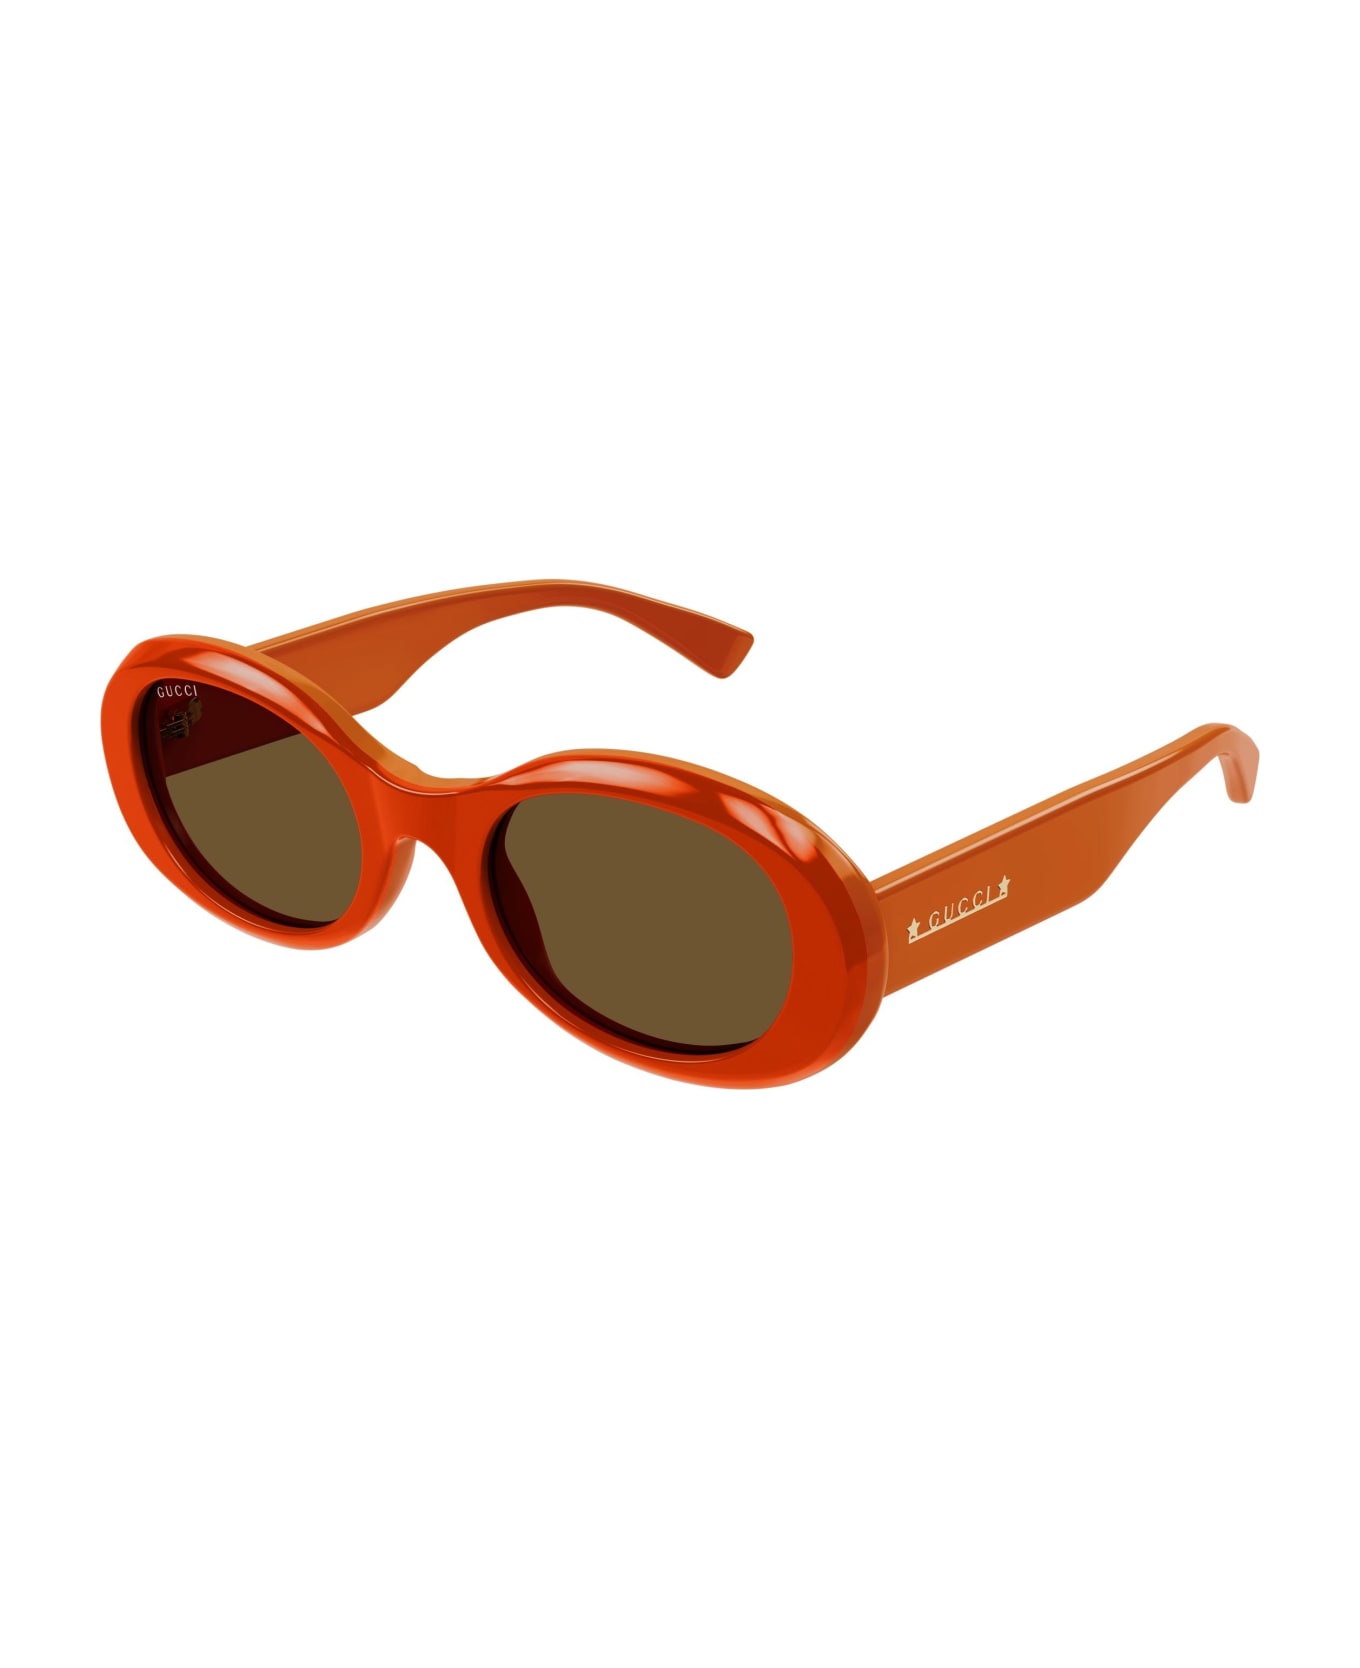 Gucci Eyewear Sunglasses - Arancione/Marrone サングラス